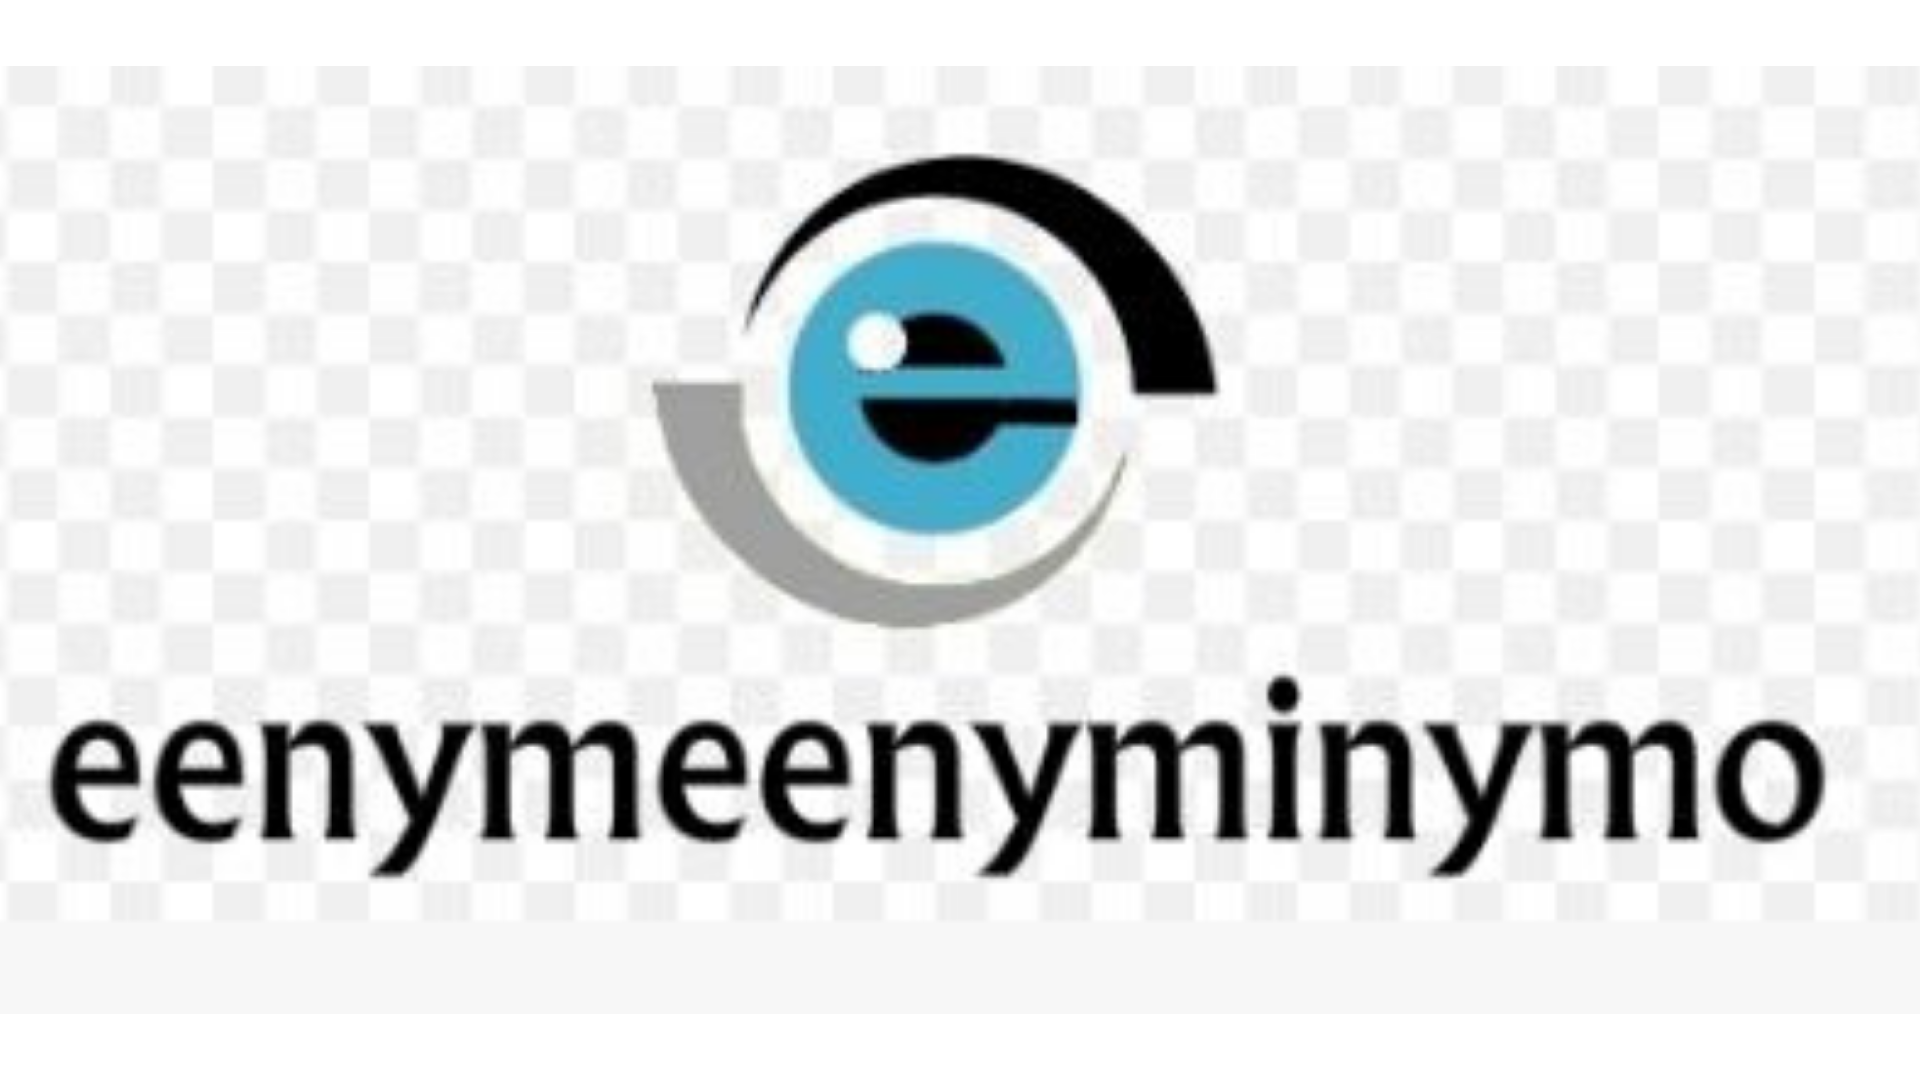 Eenymeenyminymo Pty Ltd